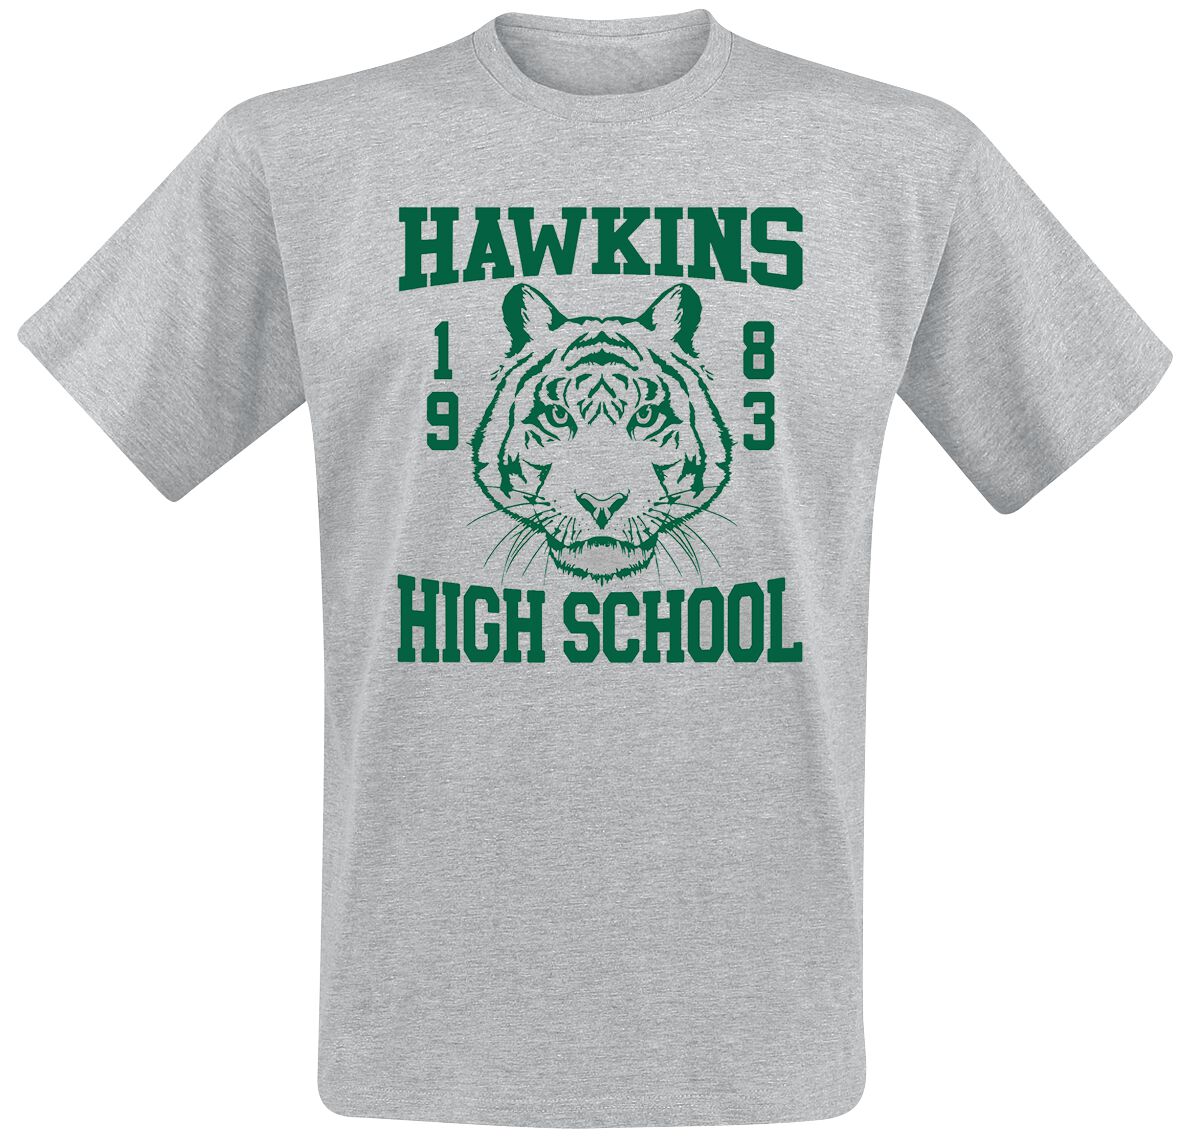 Hawkins High School T-Shirt grau meliert von Stranger Things